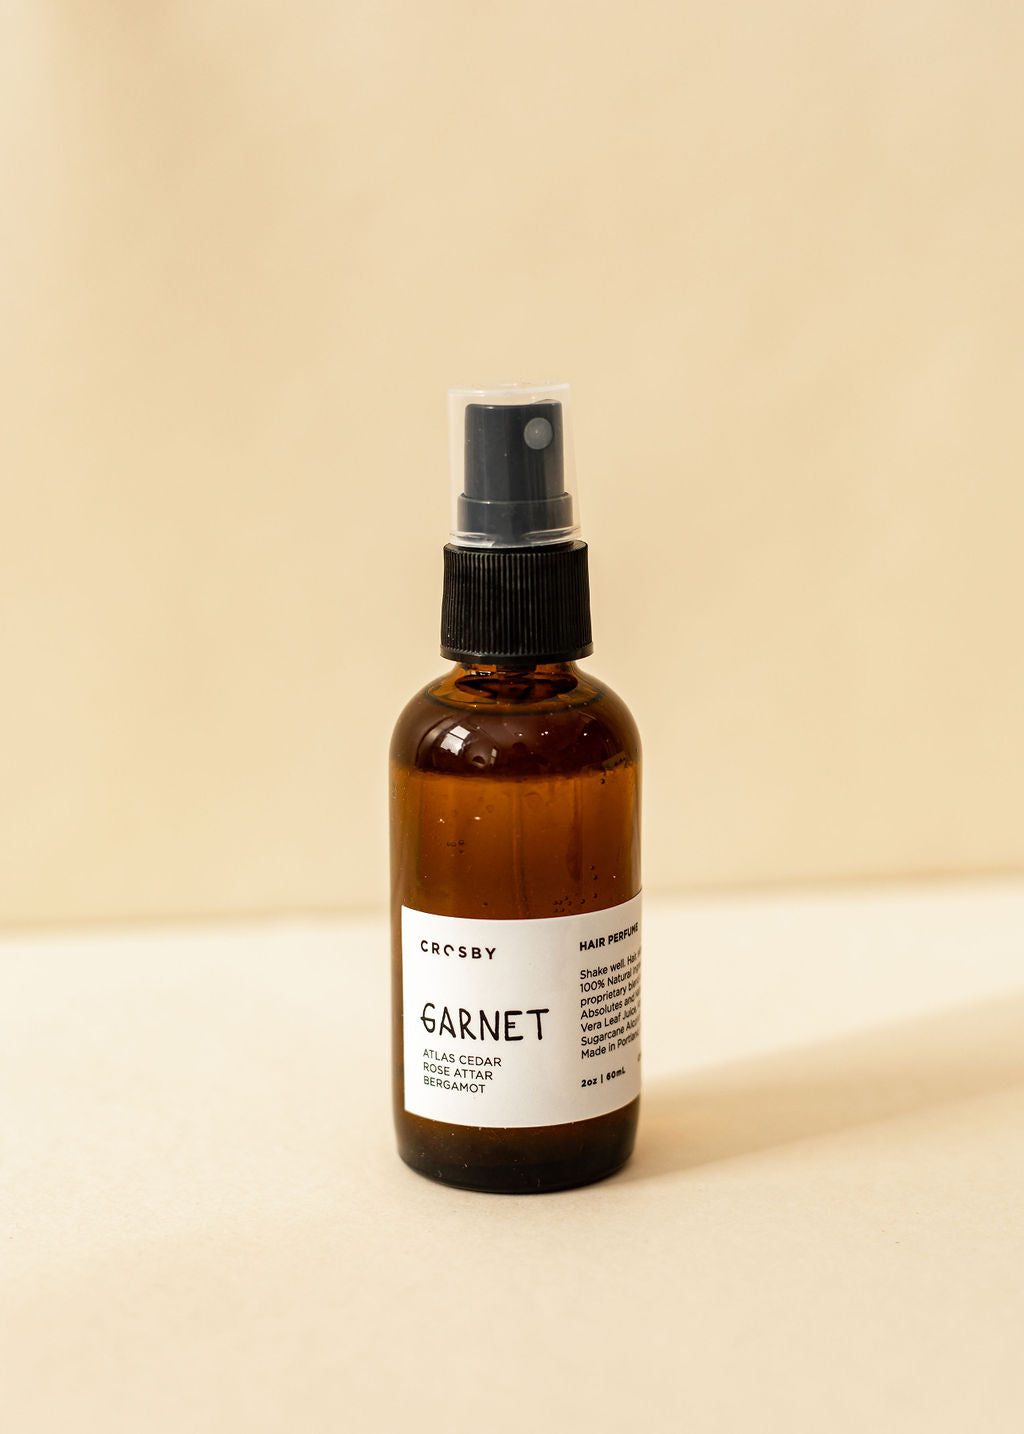 A single amber spray bottle of hair perfume, Garnet